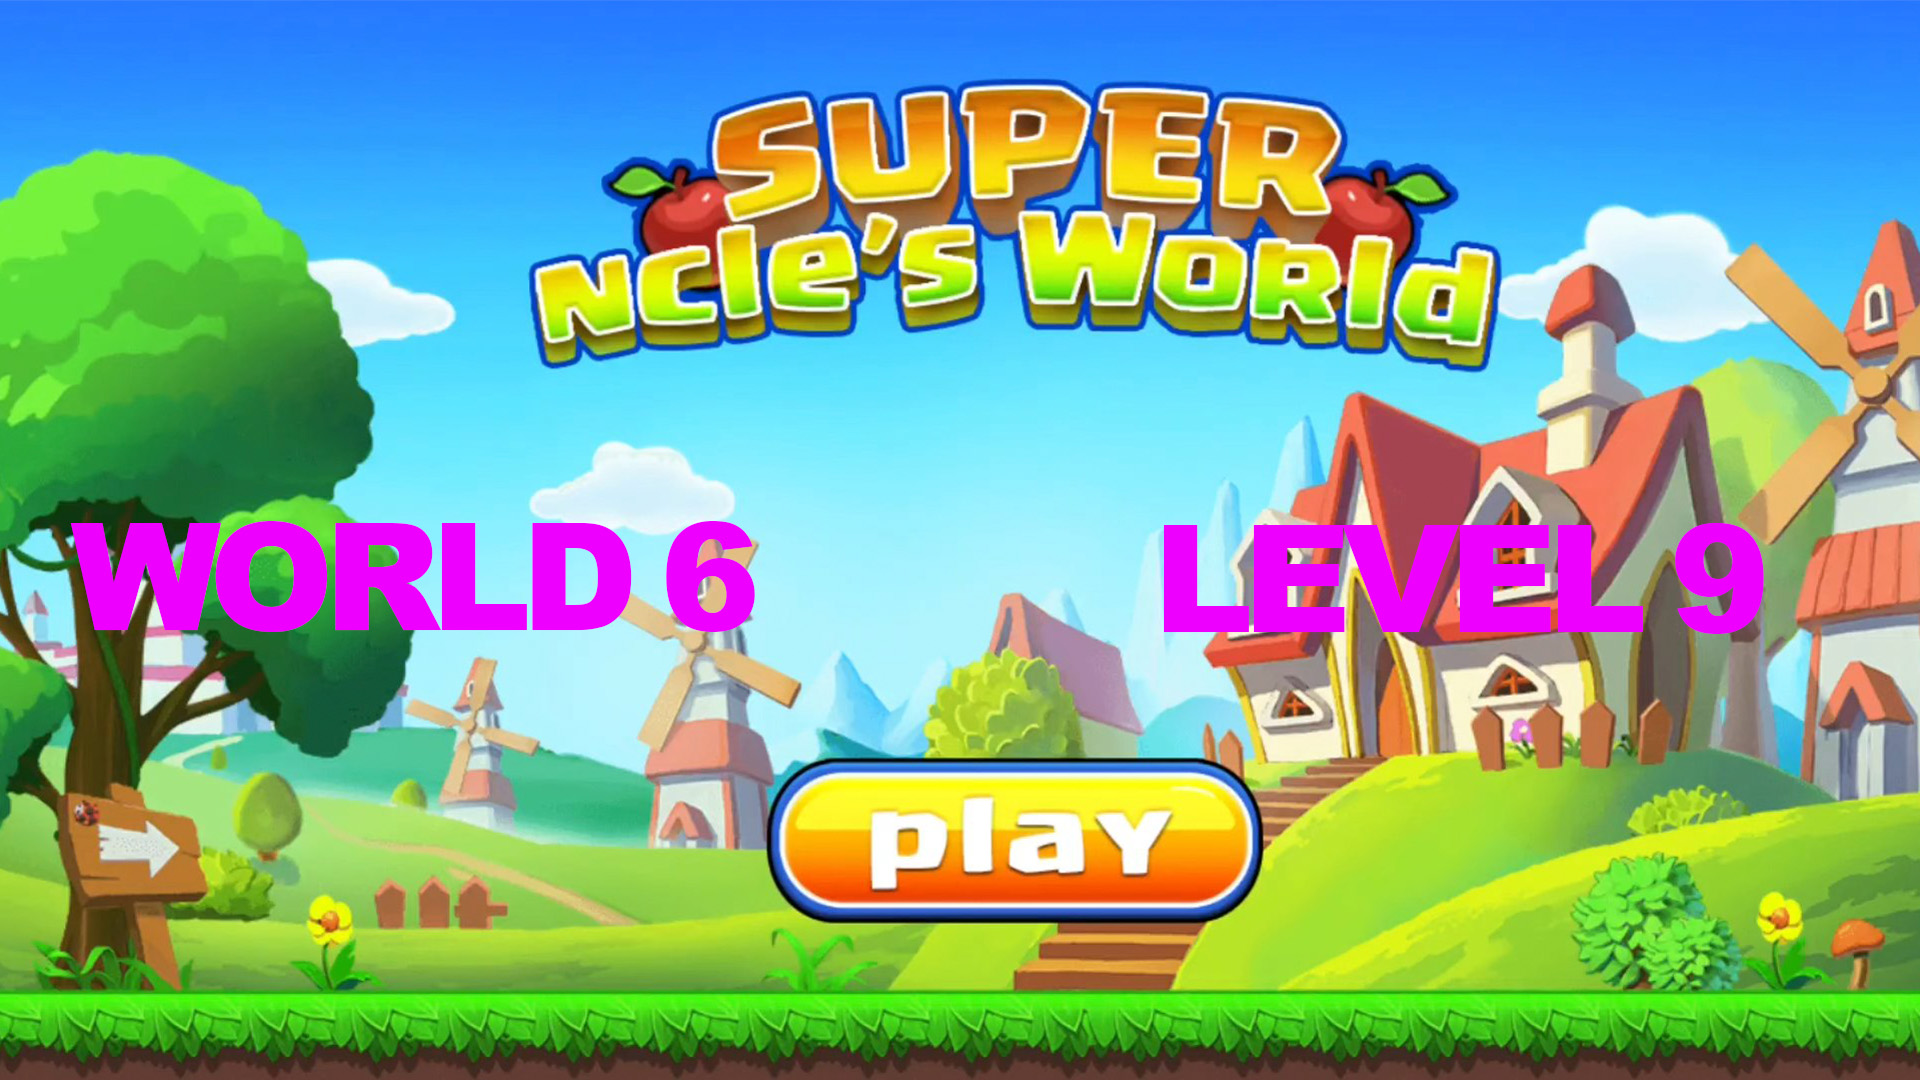 Super ncle's  World 6. Level 9.